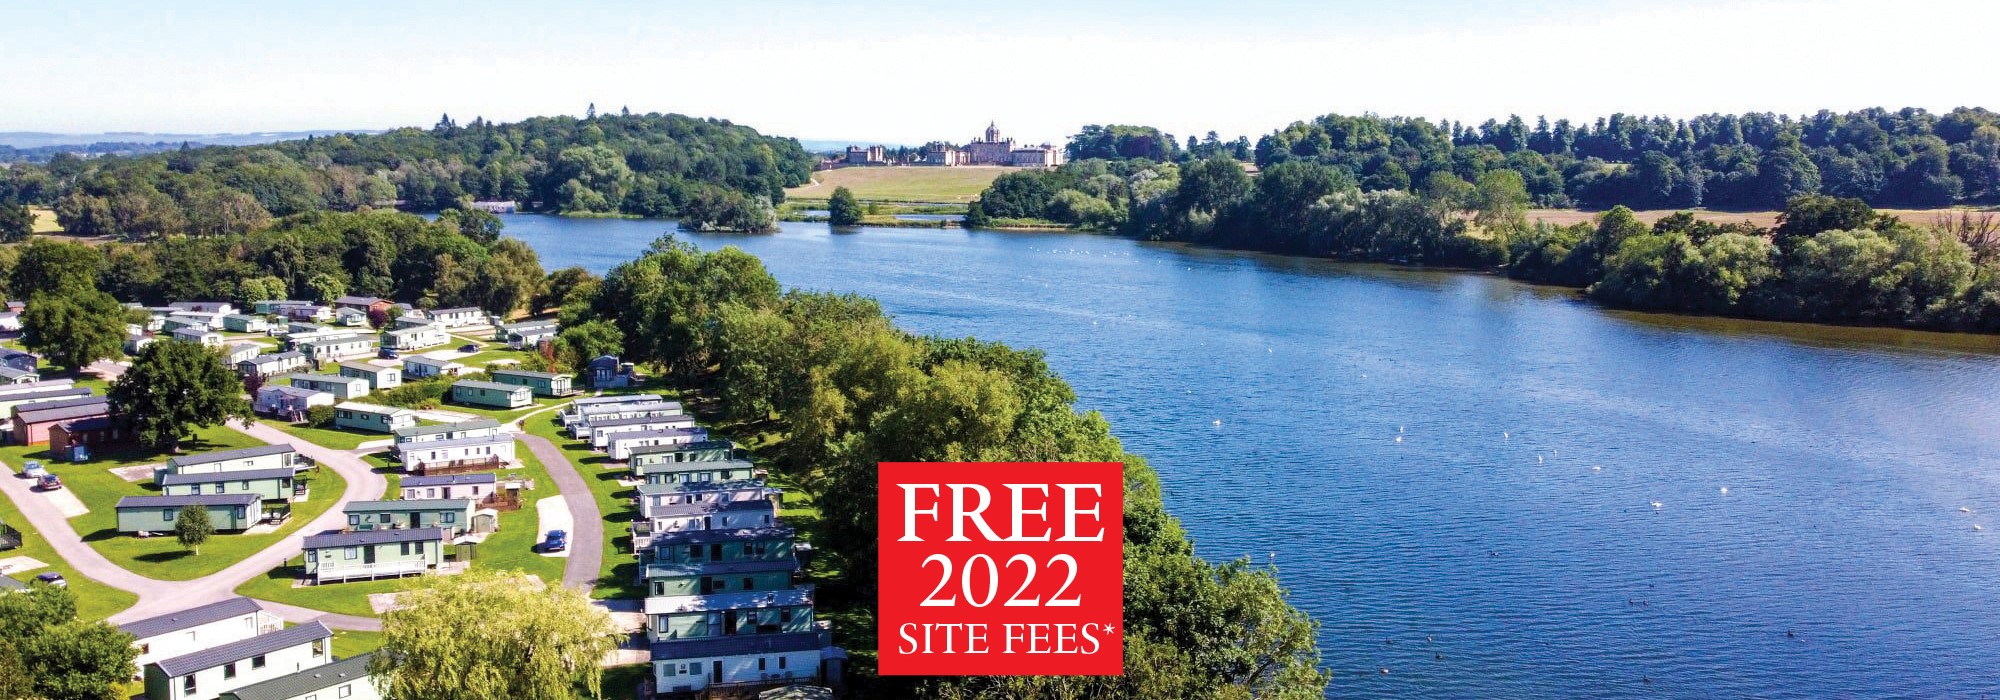 Free site fees